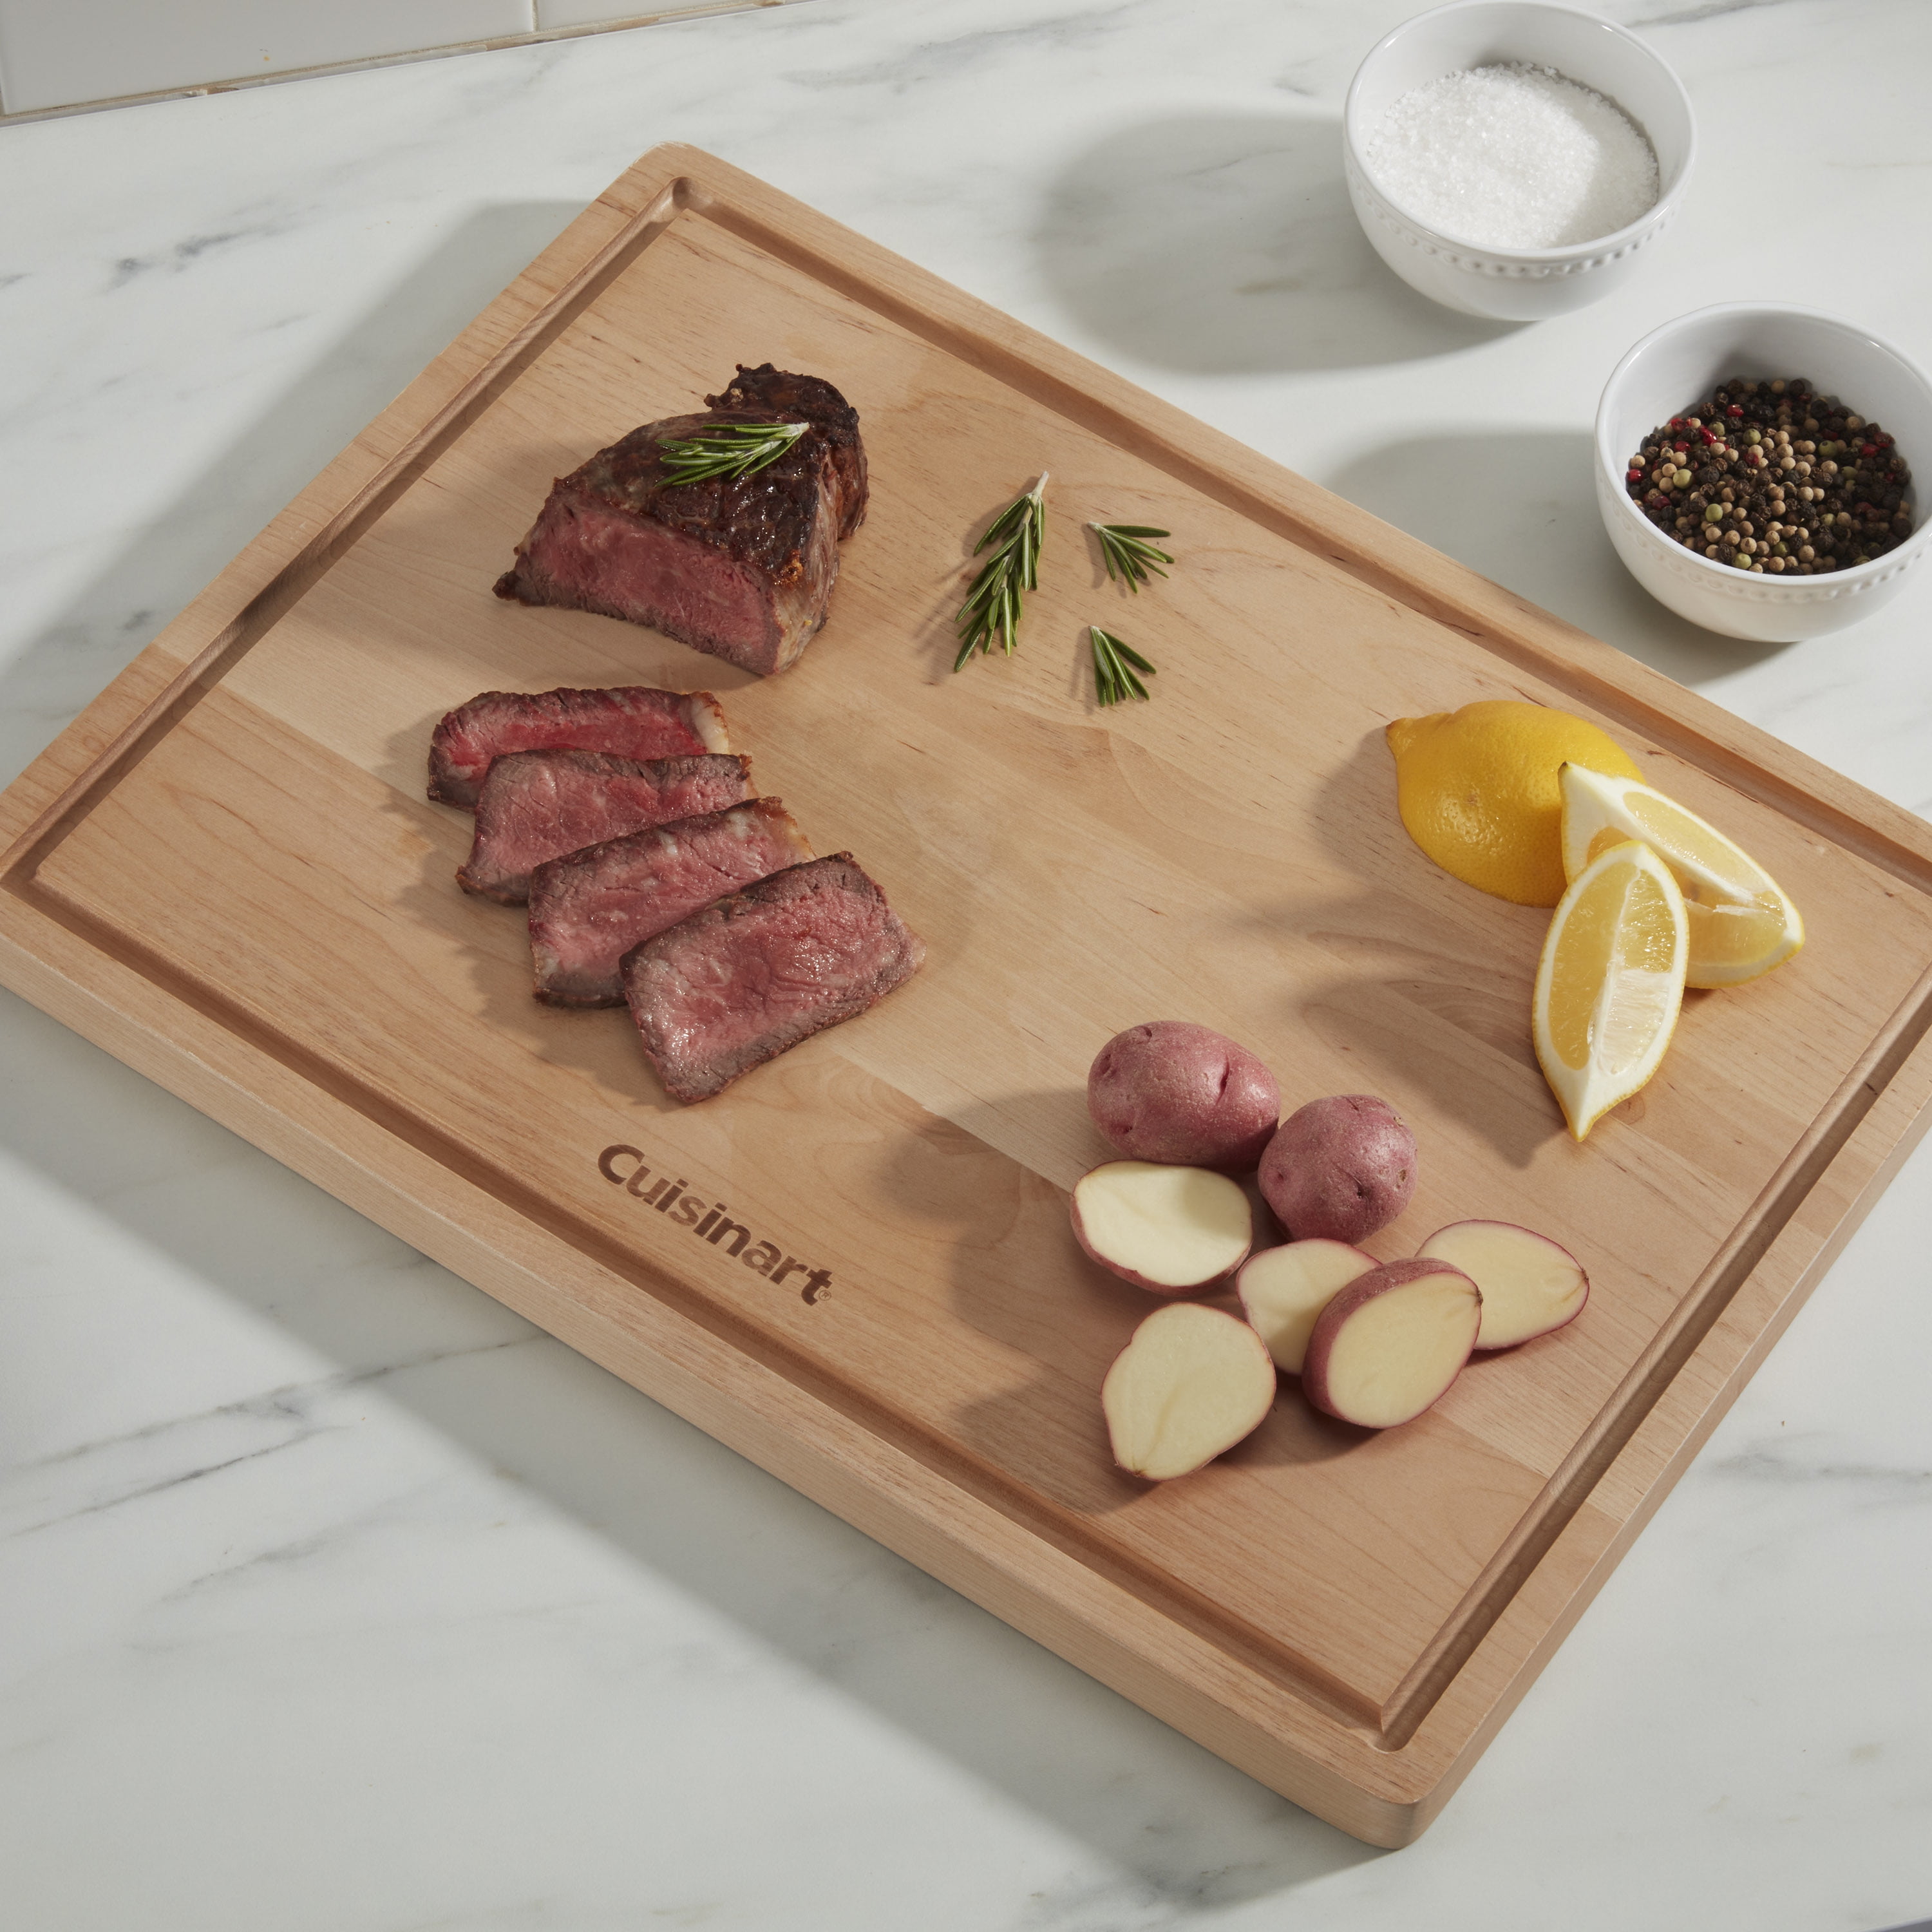 Cuisinart 17” Reversible Maple Wood Cutting Board, CWB-17M3 